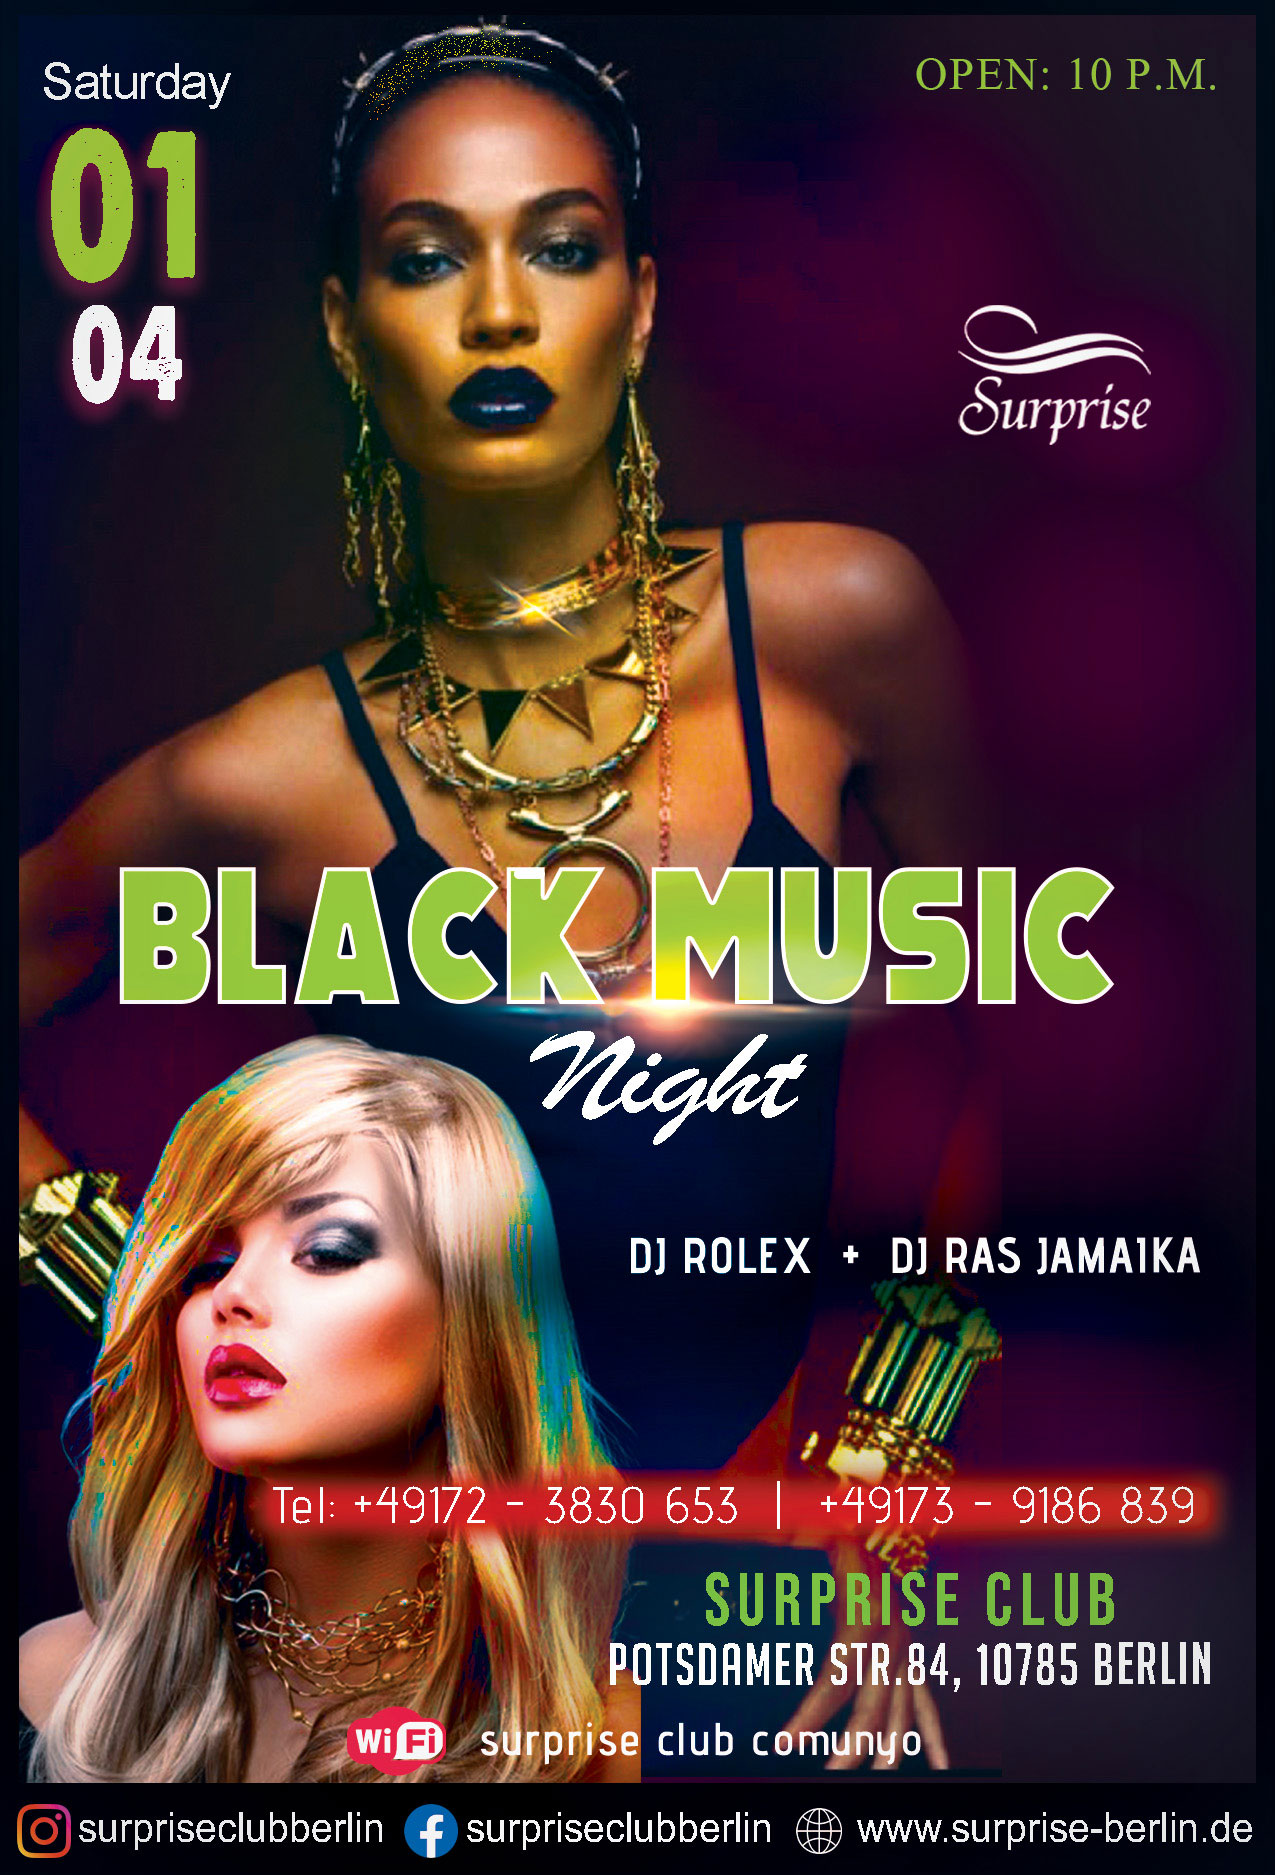 Black music party in Surprise night club Berlin,night life Berlin